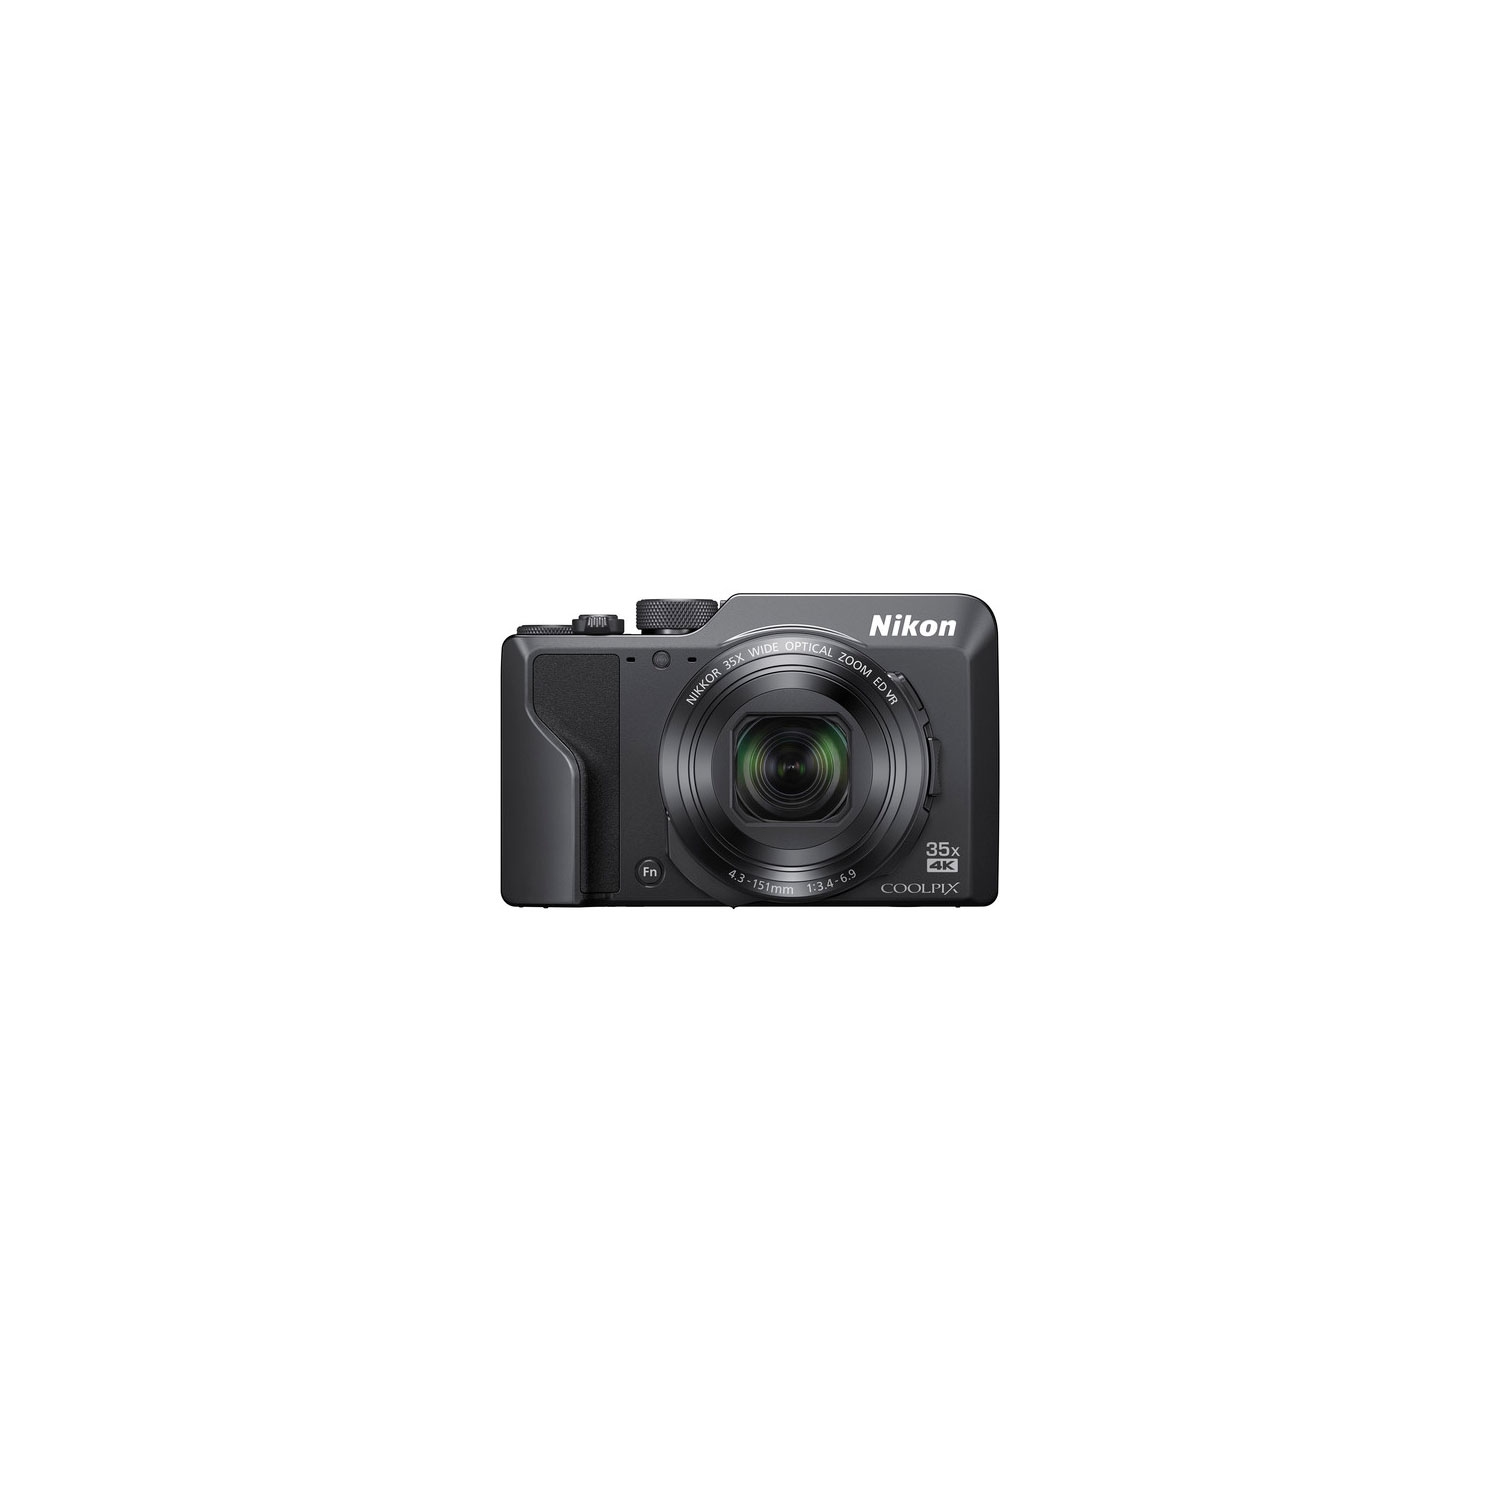 Nikon COOLPIX A1000 Digital Camera (Black) - US Version w/ Seller Warranty